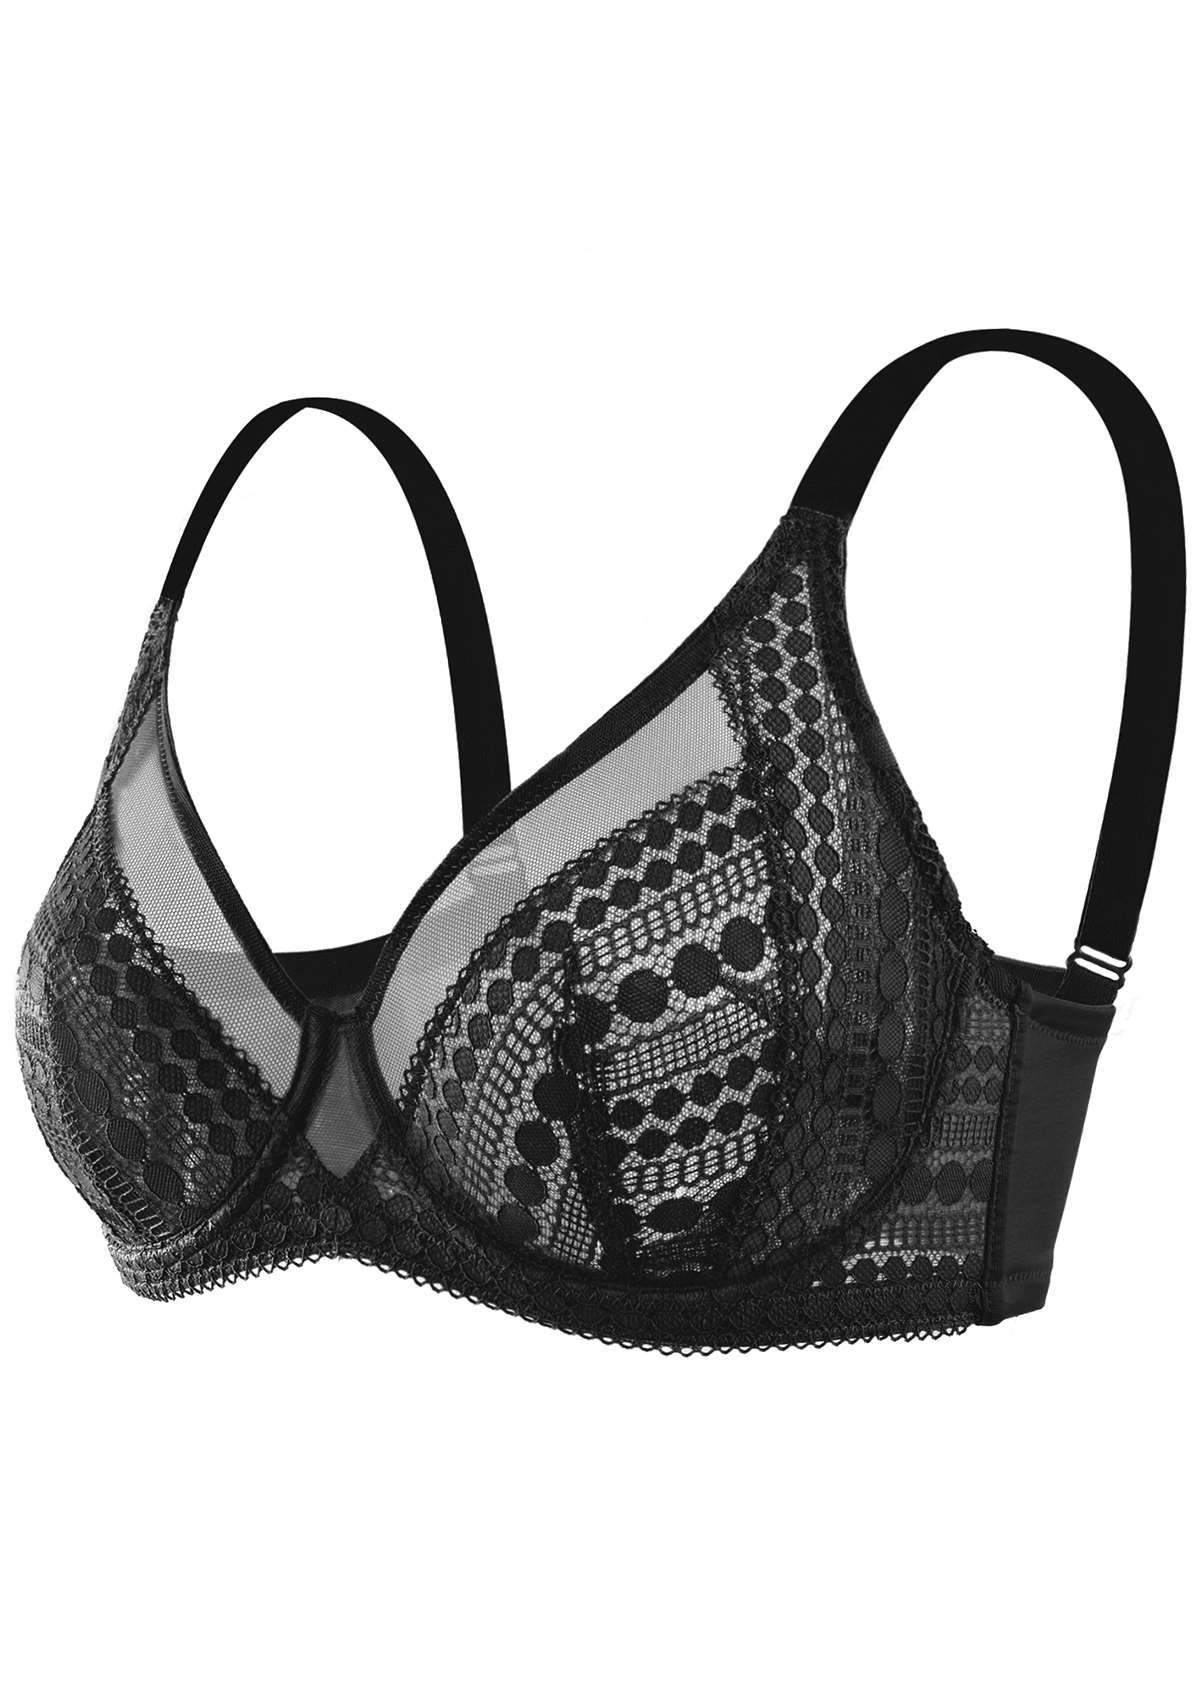 HSIA Heroine Matching Bra And Panties: Unlined Lace Unpadded Bra - Black / 44 / DD/E